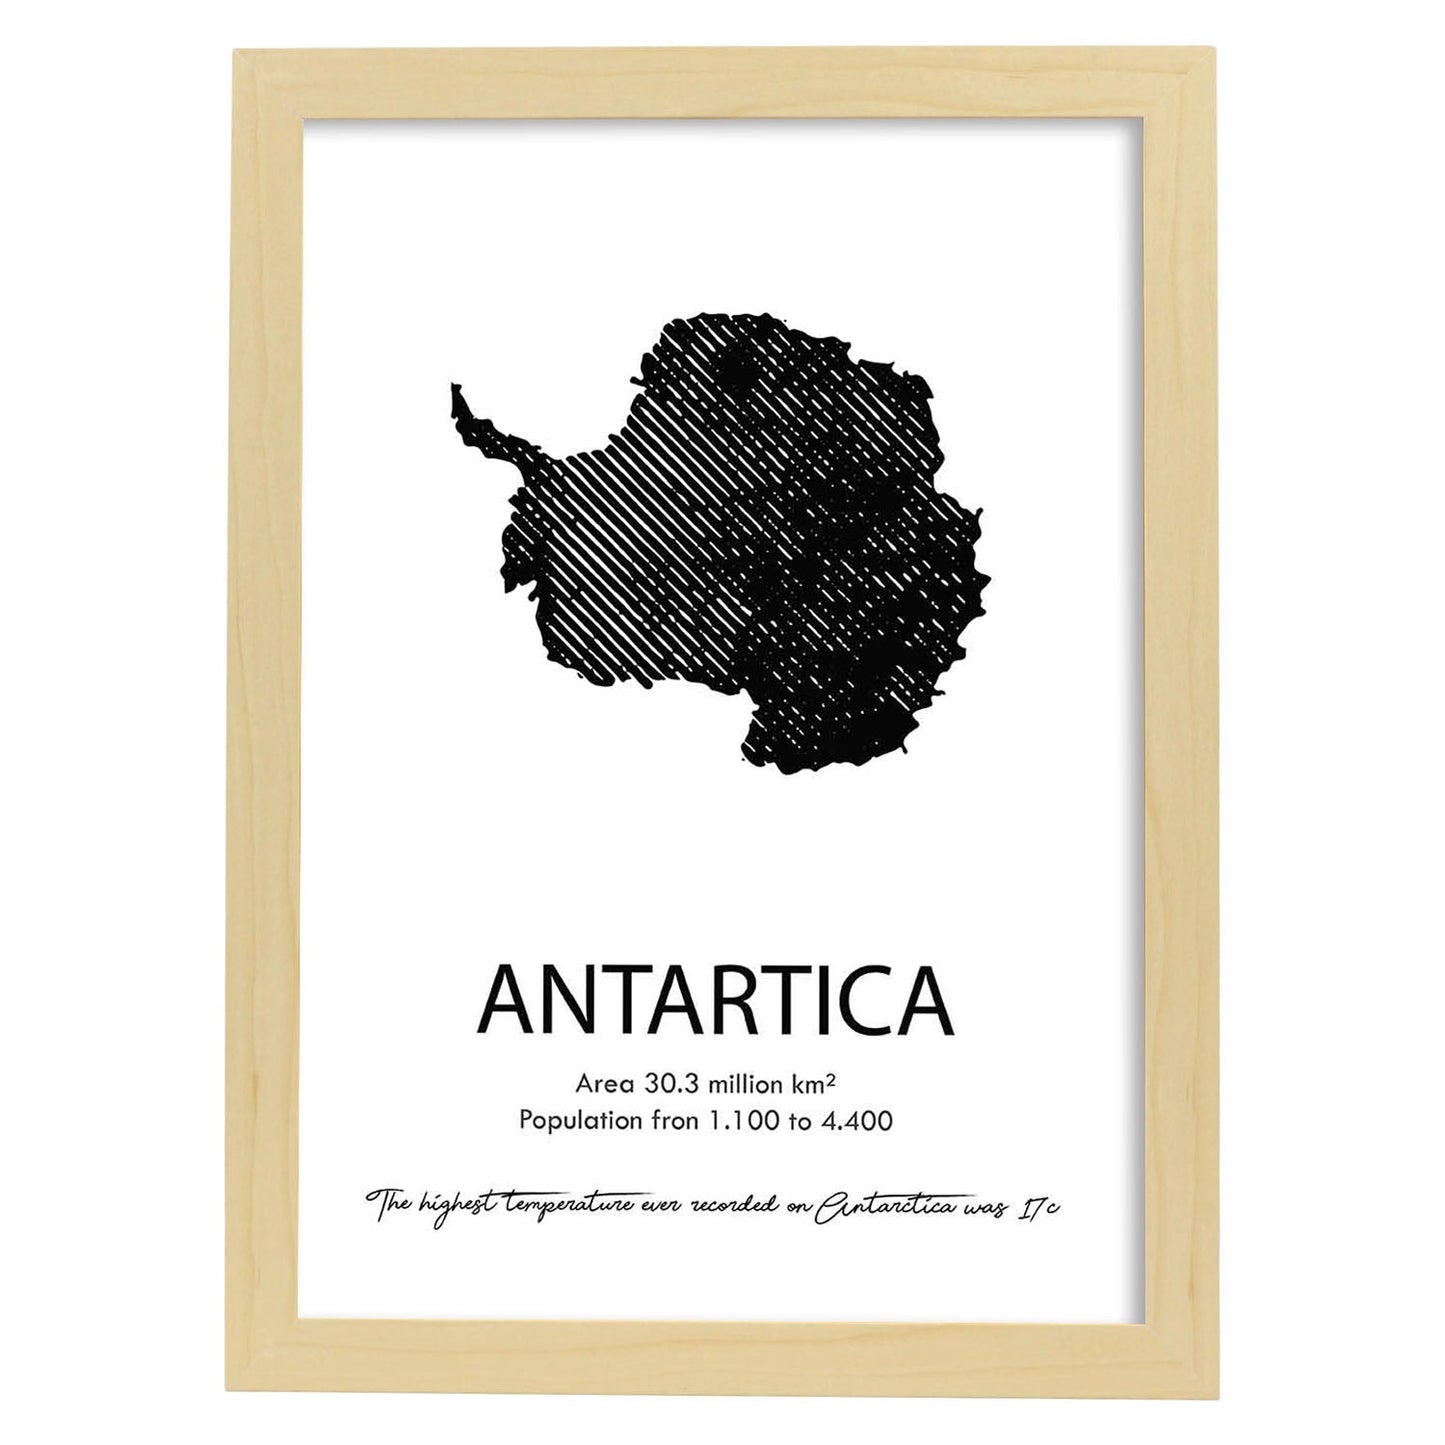 Poster de Antartida. Láminas de paises y continentes del mundo.-Artwork-Nacnic-A4-Marco Madera clara-Nacnic Estudio SL